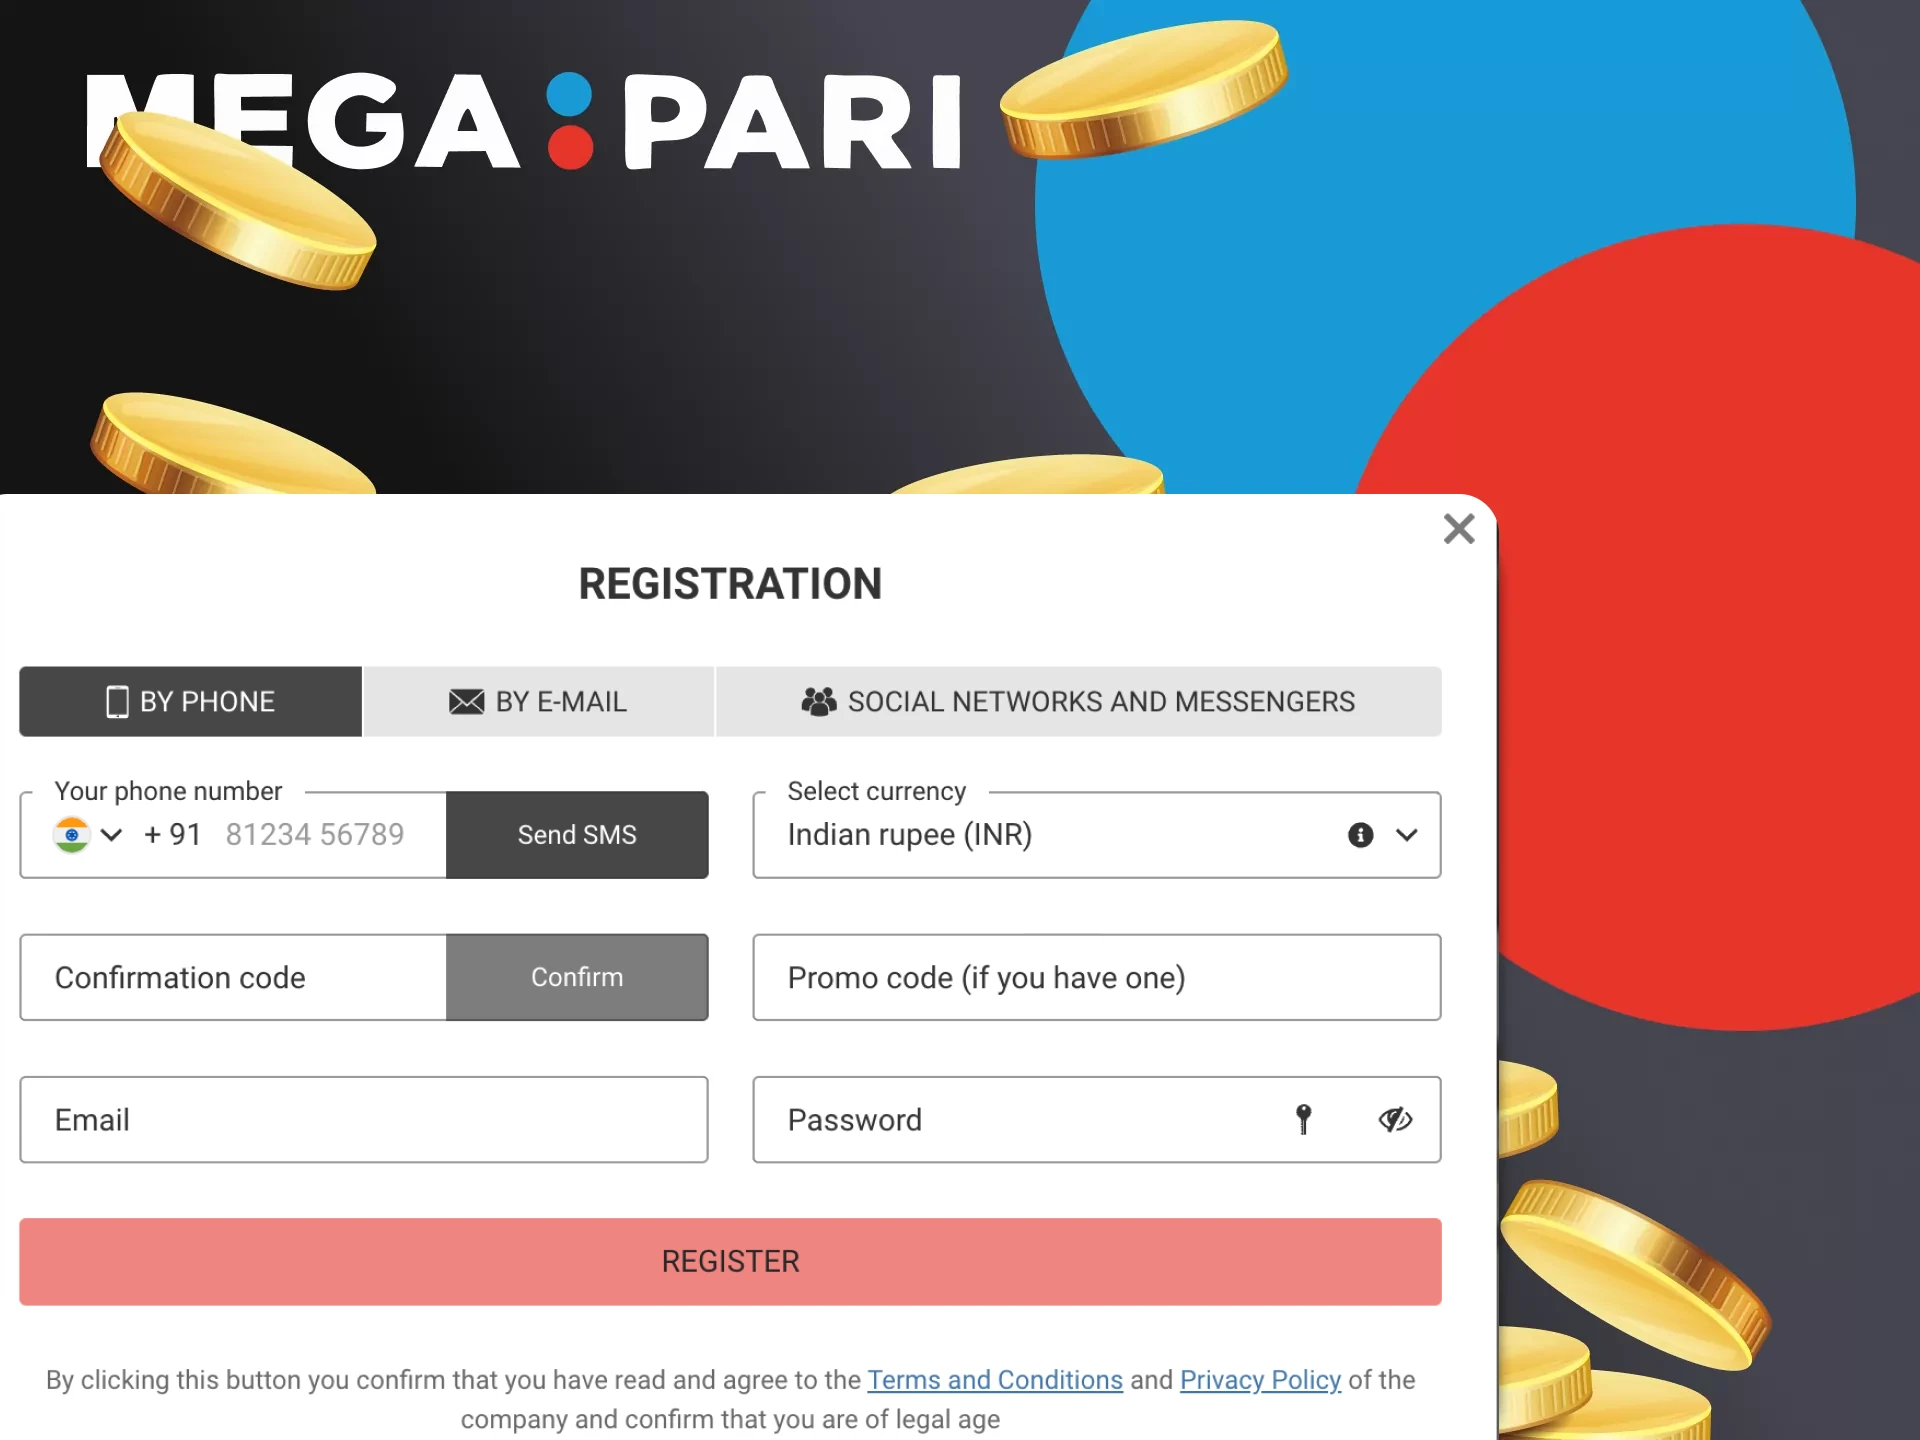 Create an account and make a minimum deposit to receive Megapari bonuses.